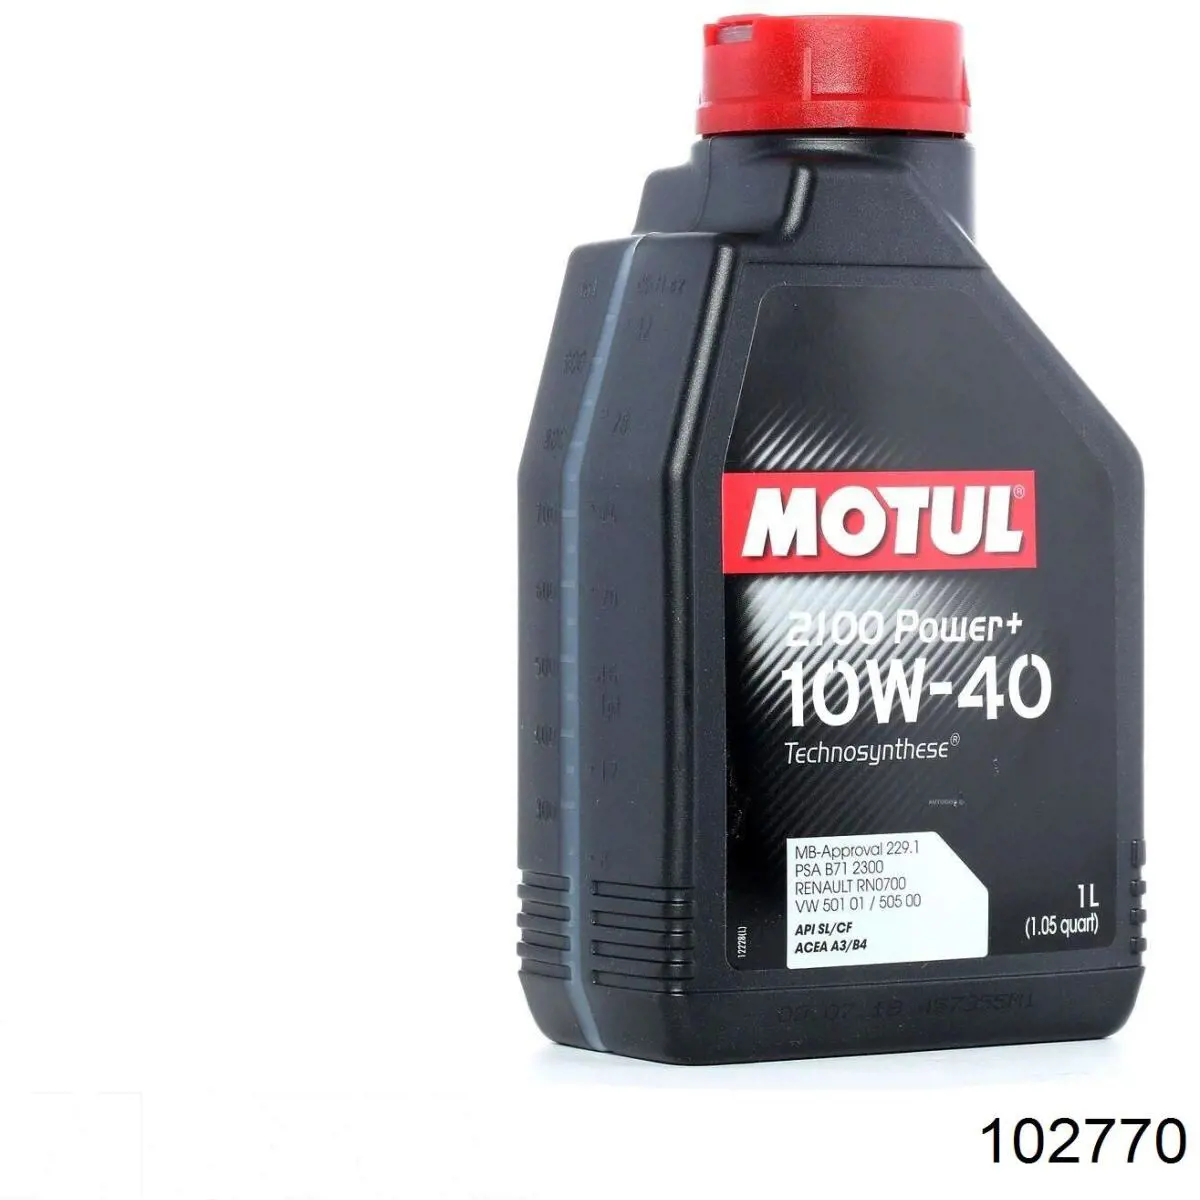 Motul 2100 Power Plus Semi sintetico 1 L (102770)